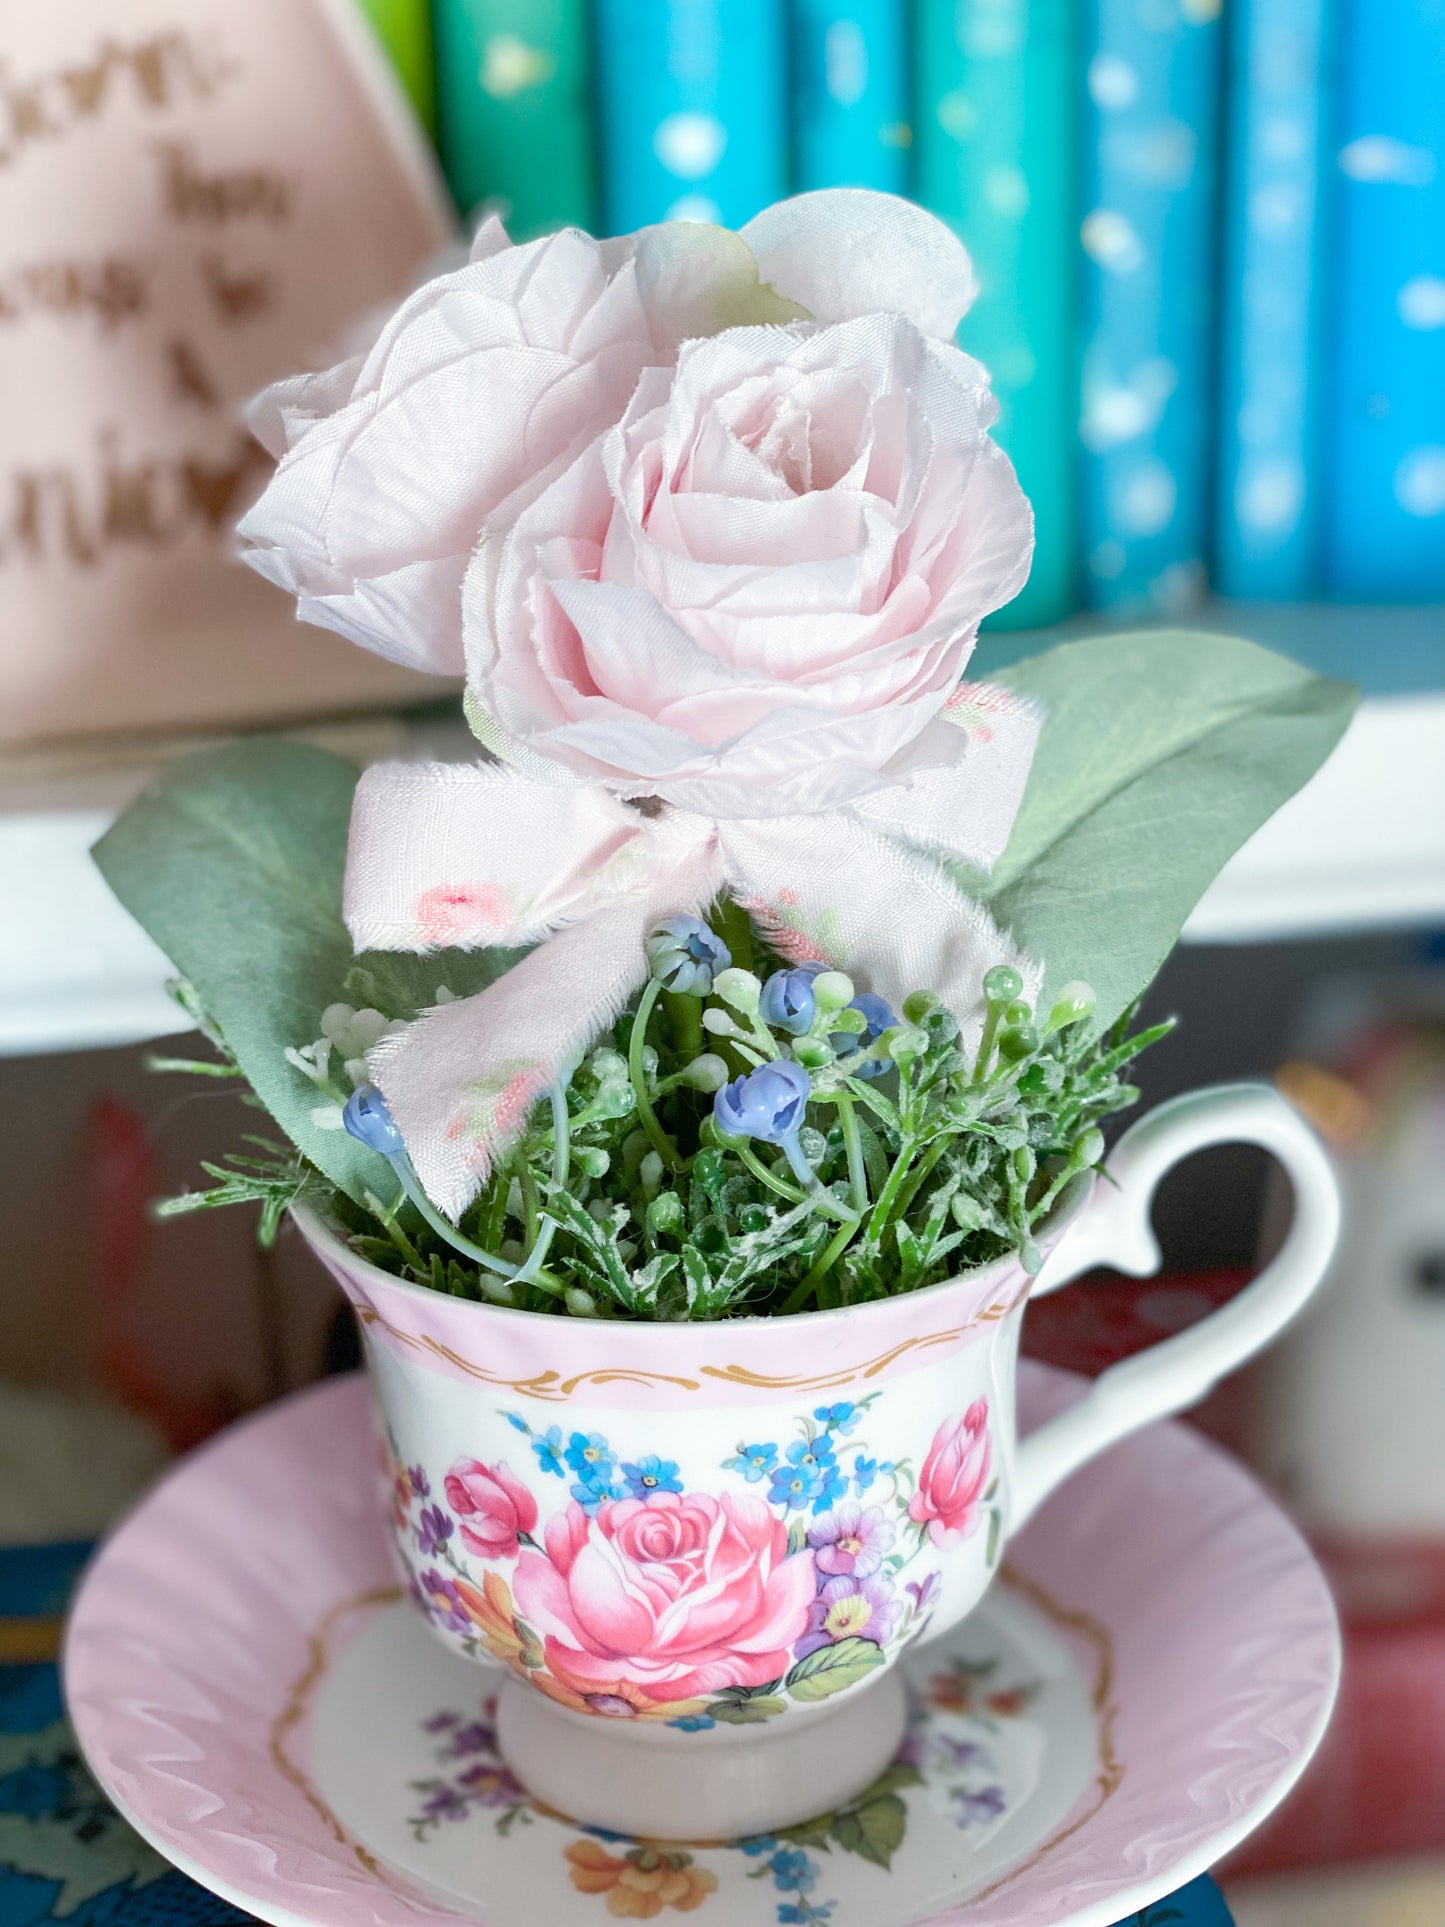 Maßgeschneiderte rosa und lila Rosen-Teetassen-Arrangement